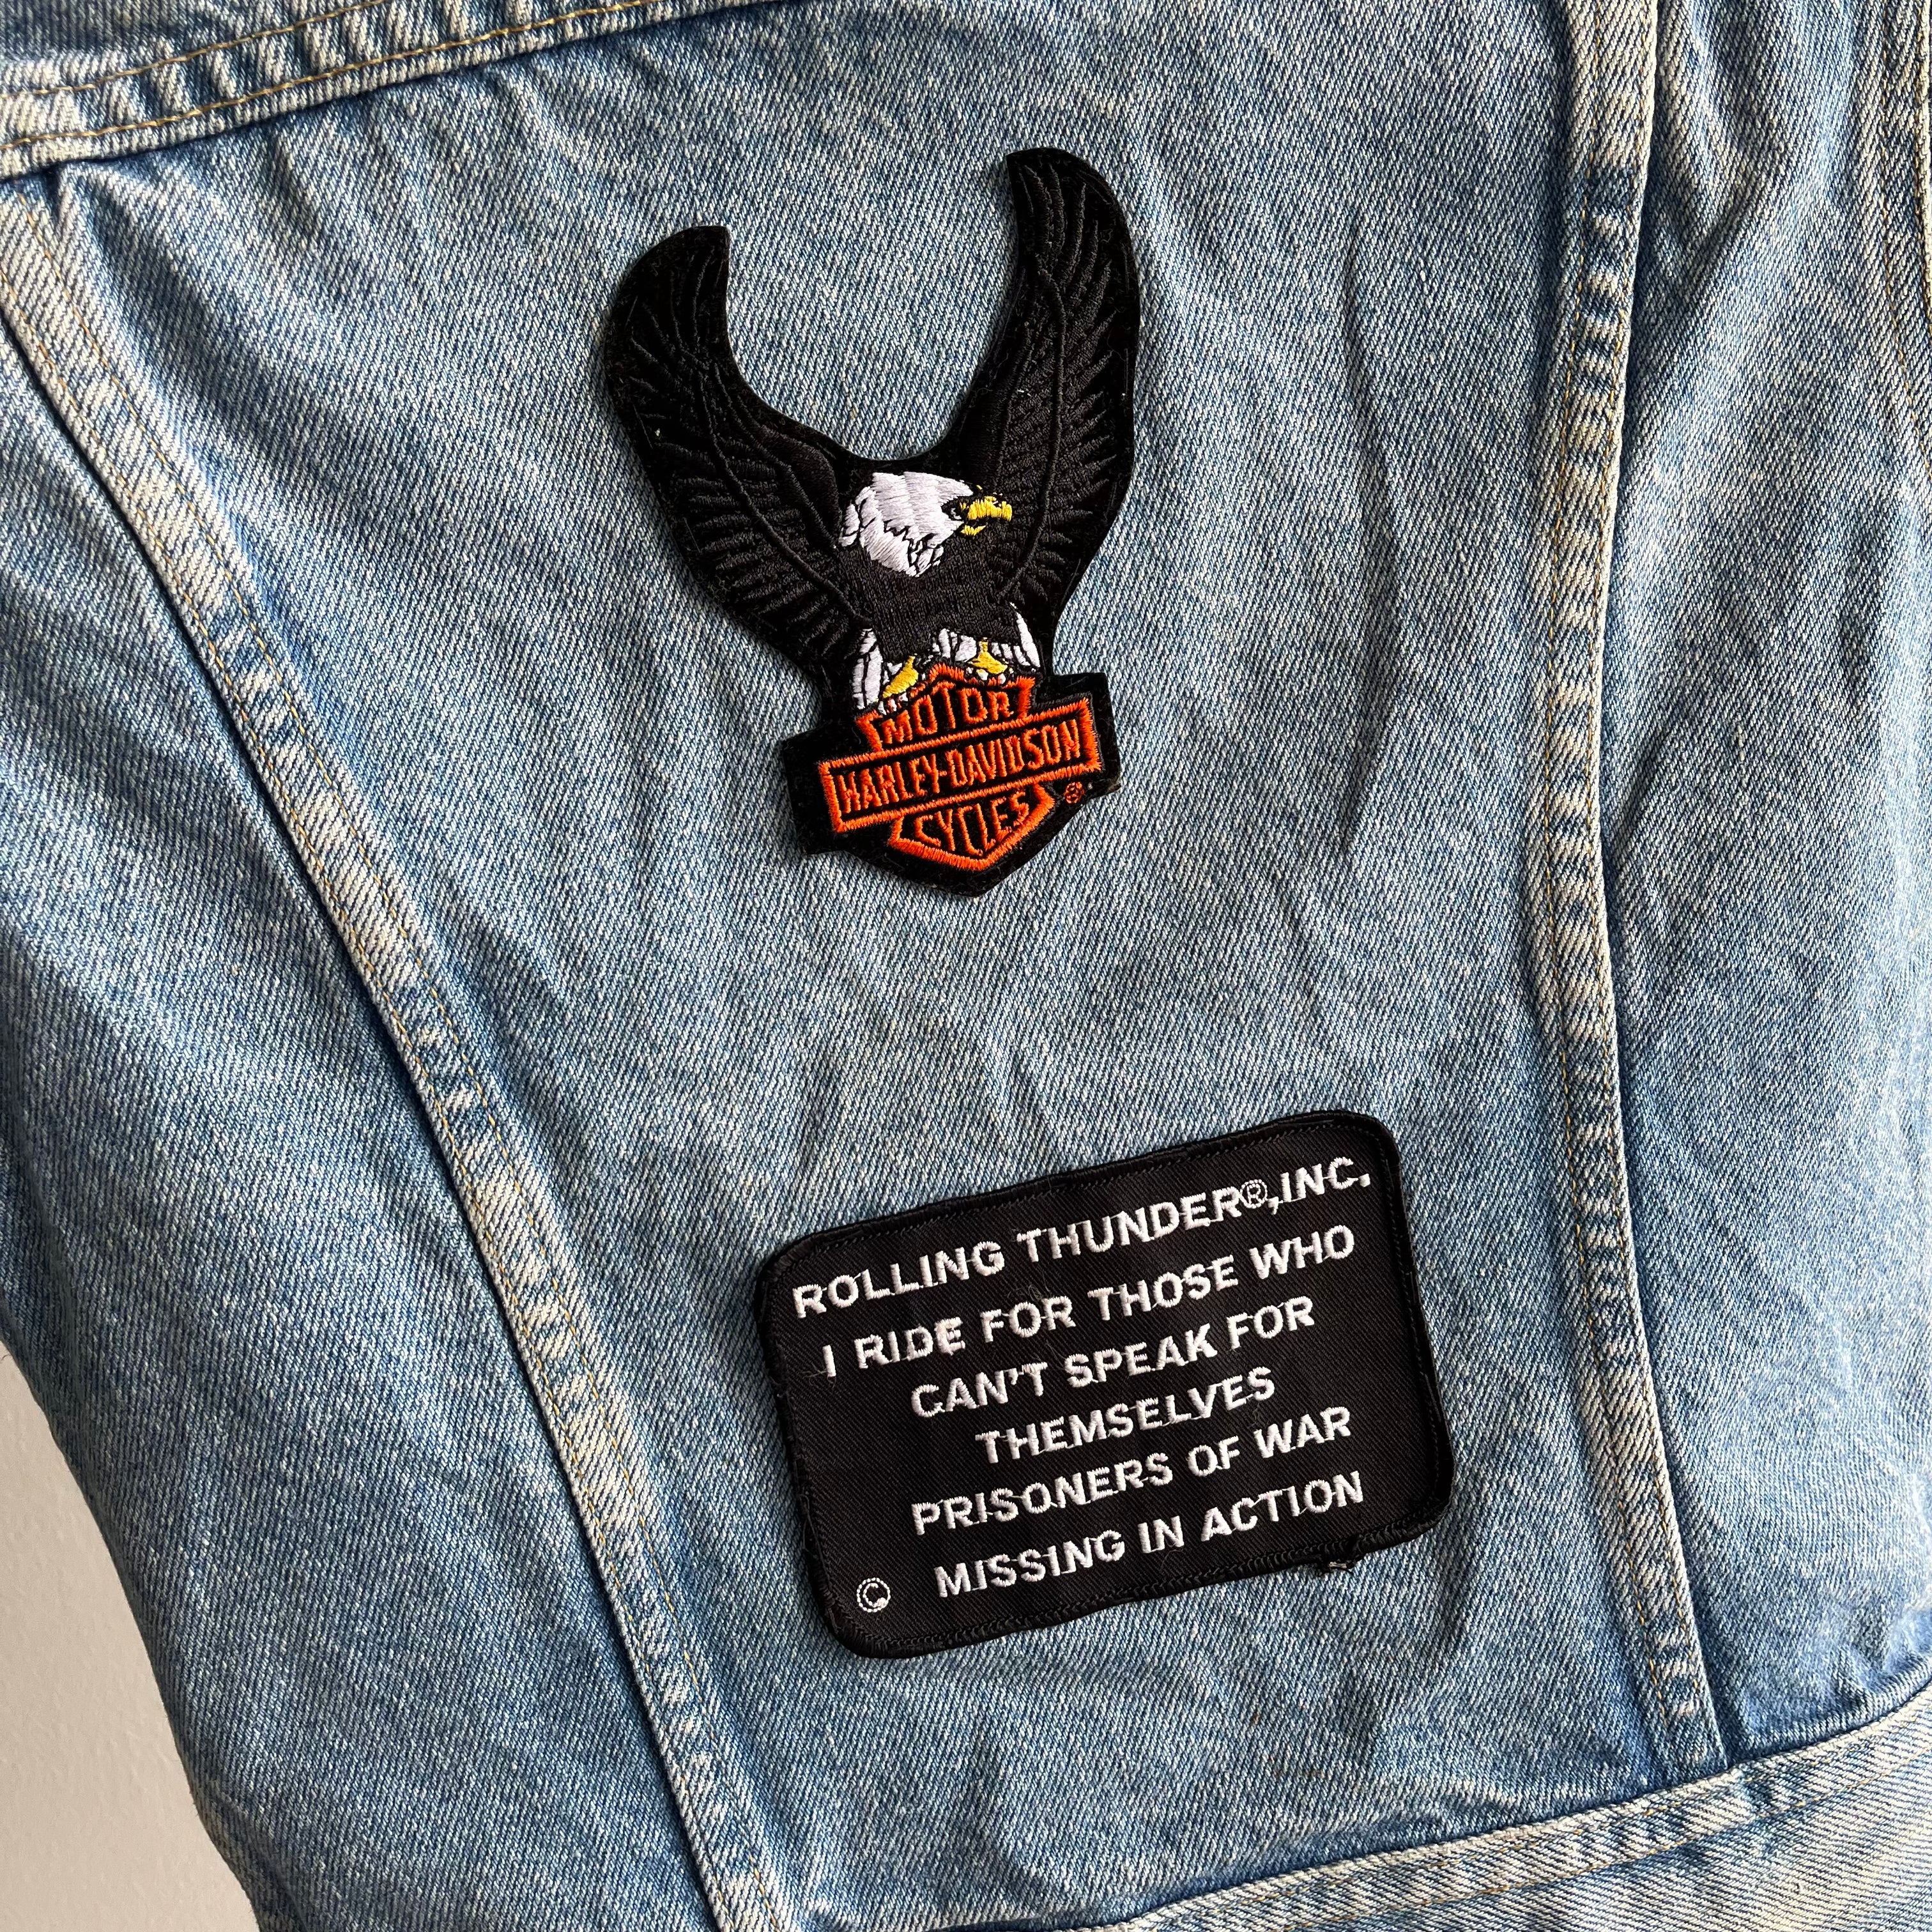 1980s Someone's Pride and Joy Harley DIY Vest by Lee Jeans